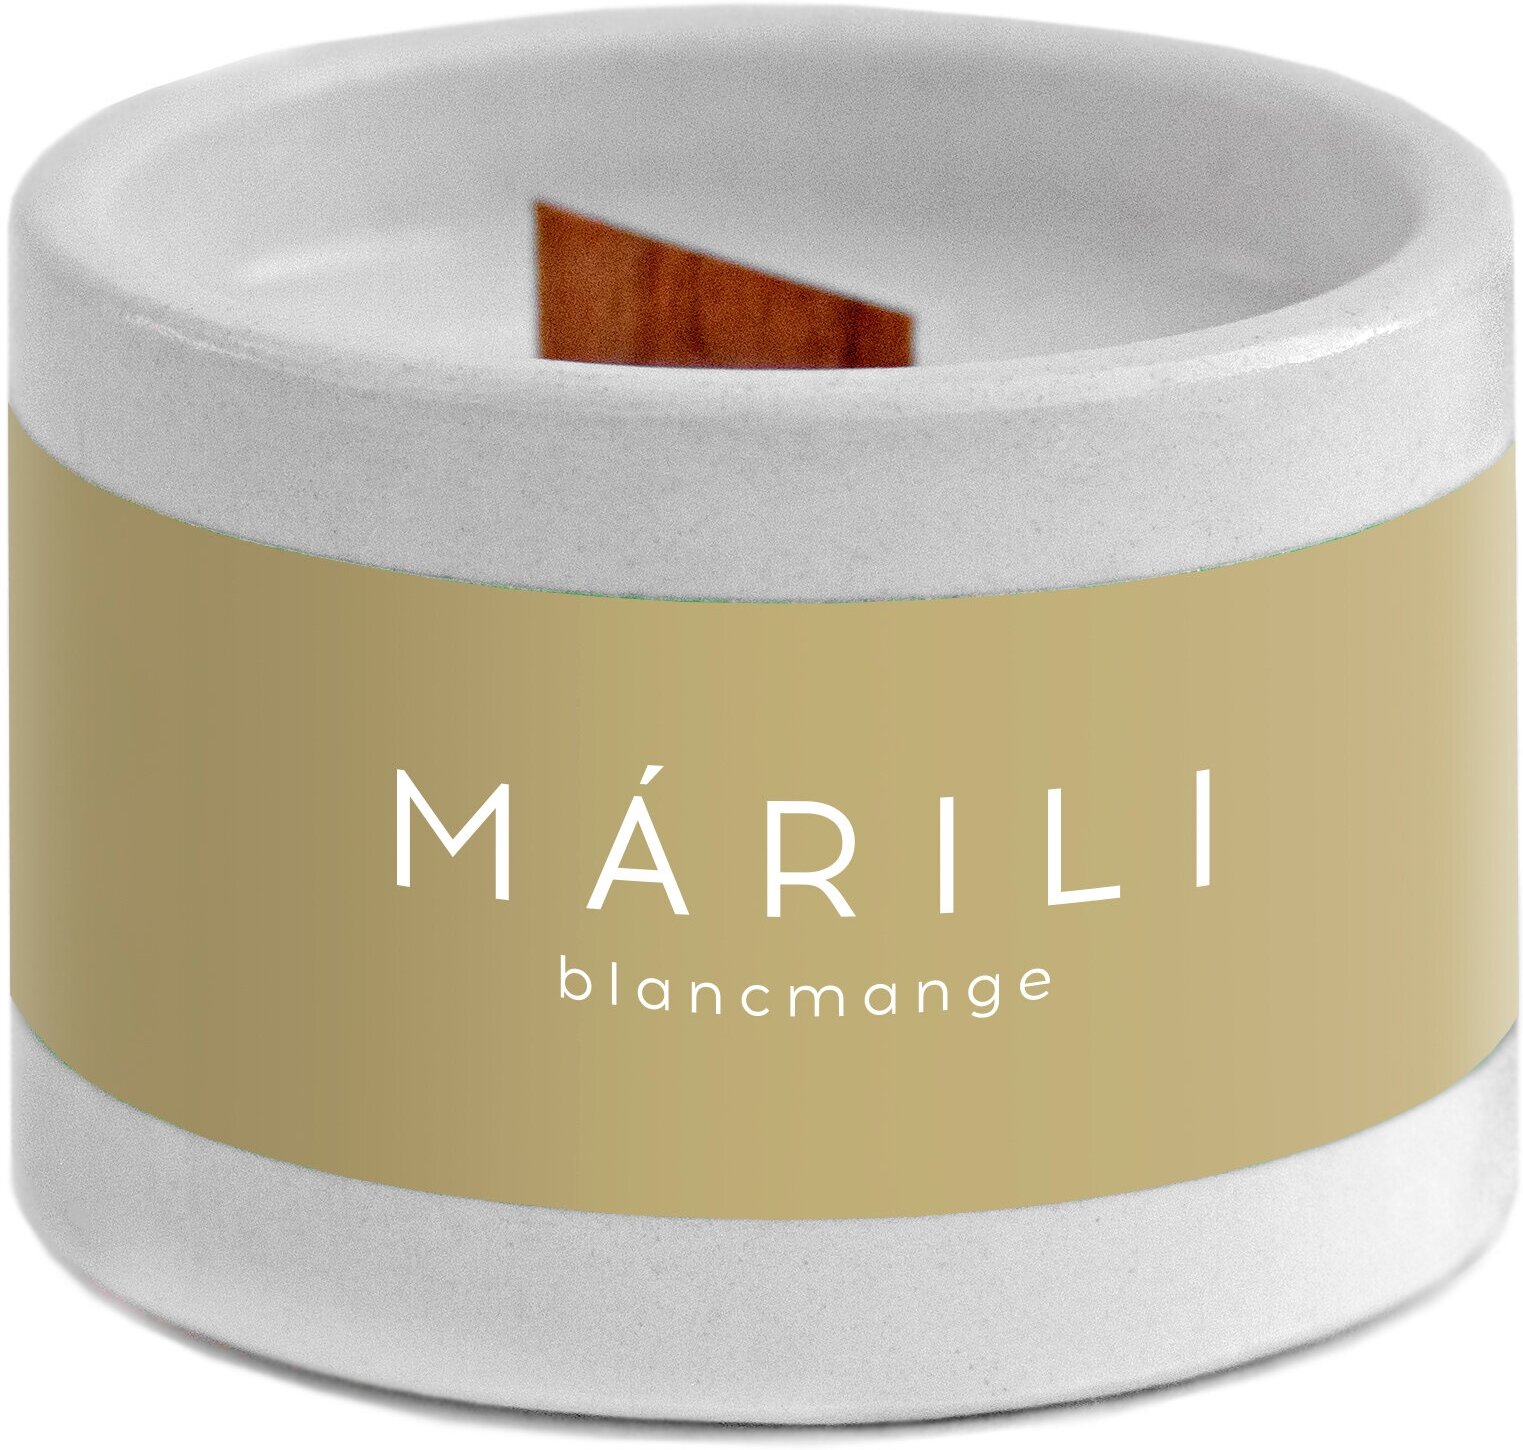 Marili / Blancmange / Аромасвеча / манго, кокосовое молоко / 30 мл